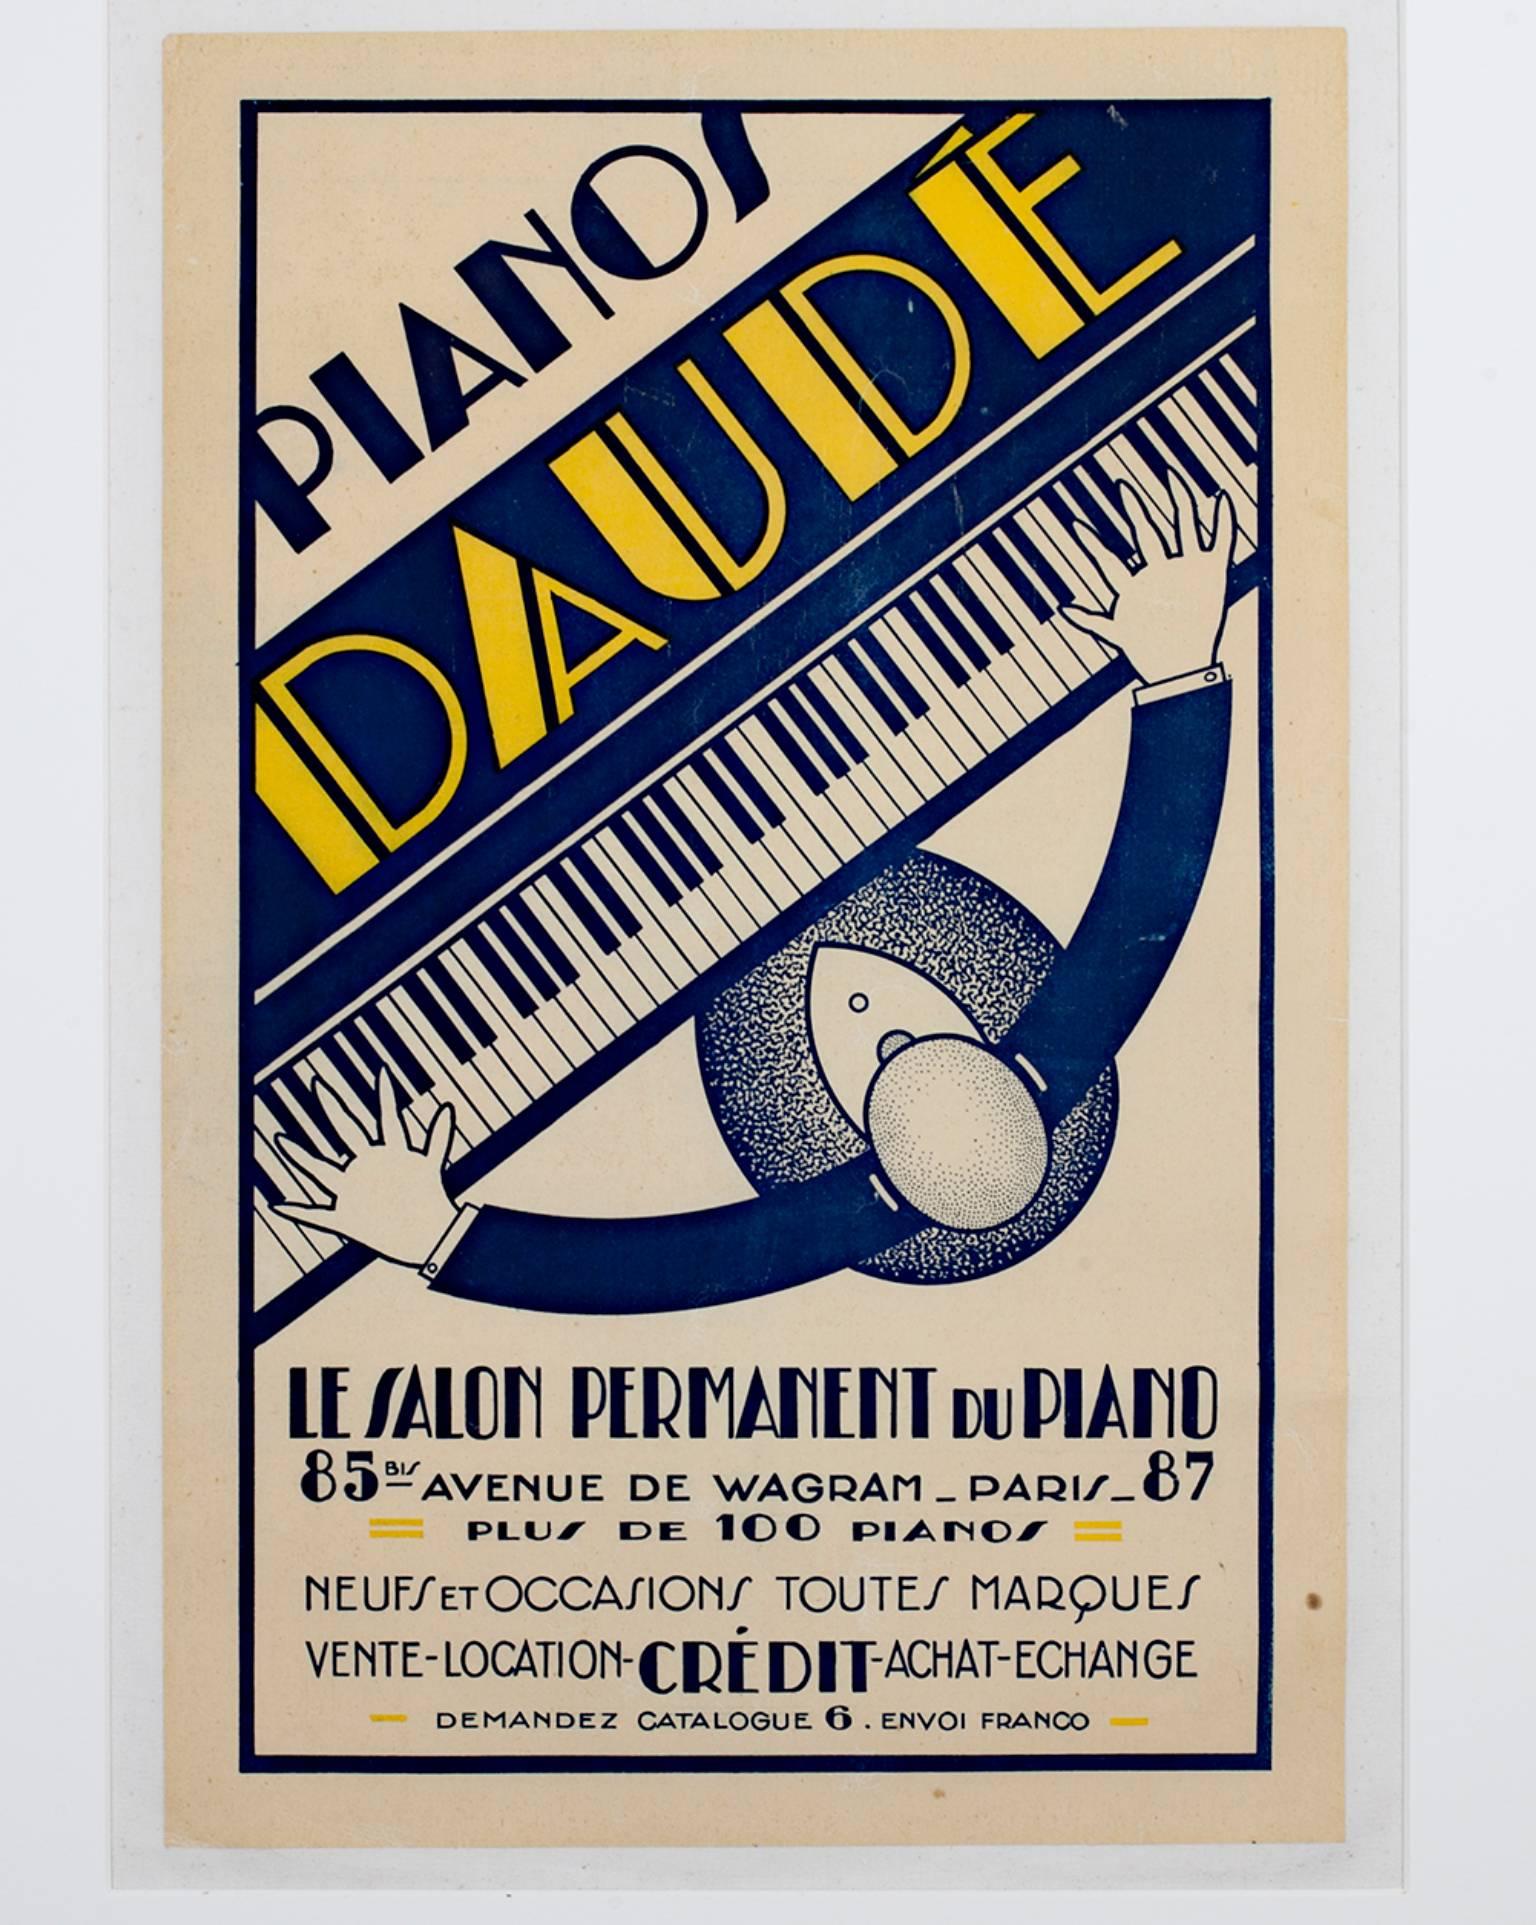 "Pianos Daude, " an Original Color Lithograph Poster by Andre Daude